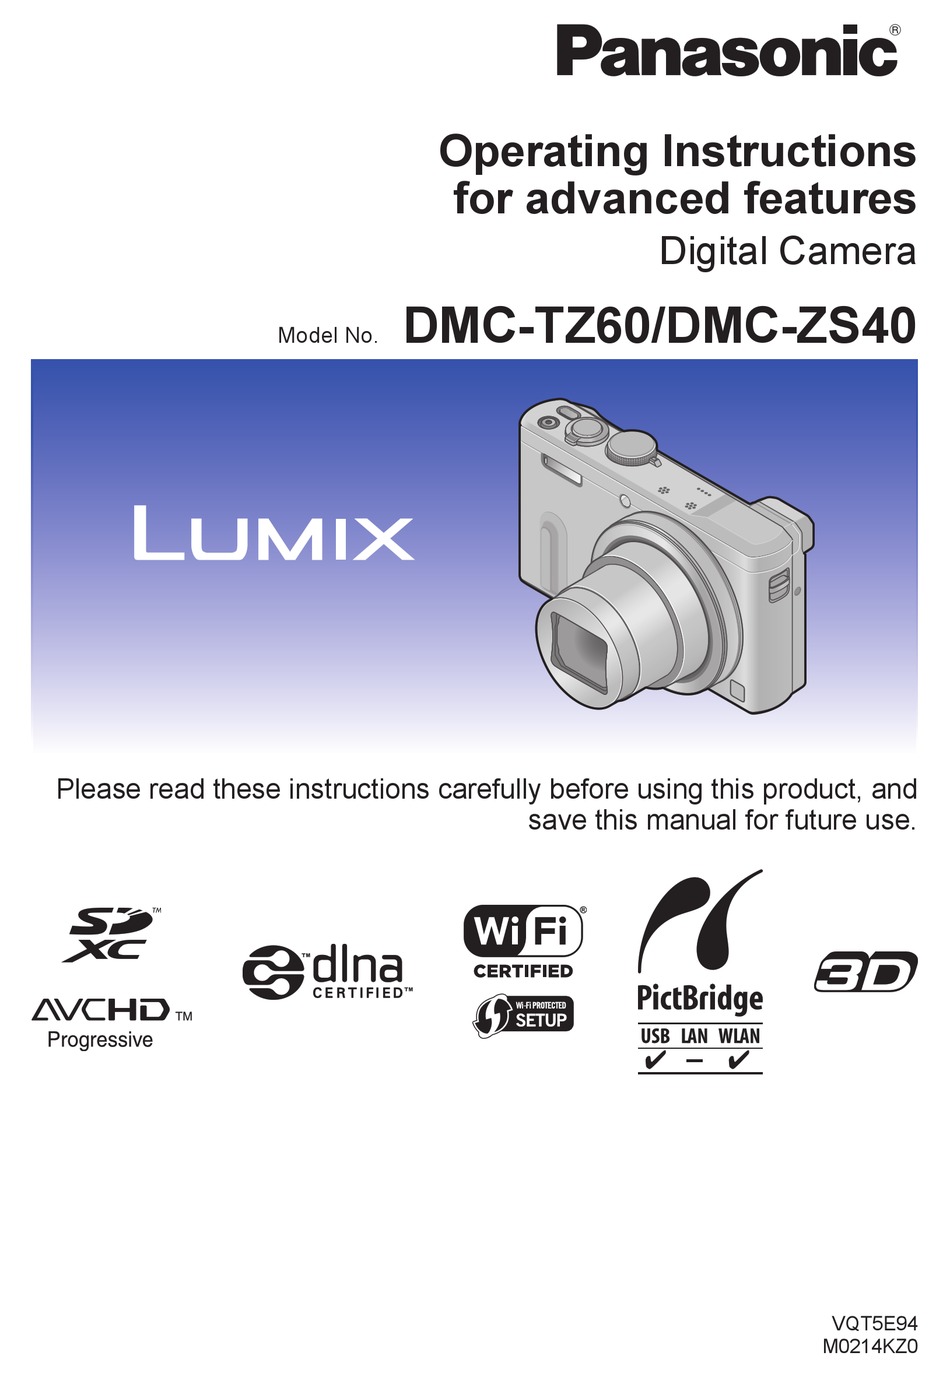 PANASONIC LUMIX DMC-ZS40 OPERATING INSTRUCTIONS MANUAL Pdf Download